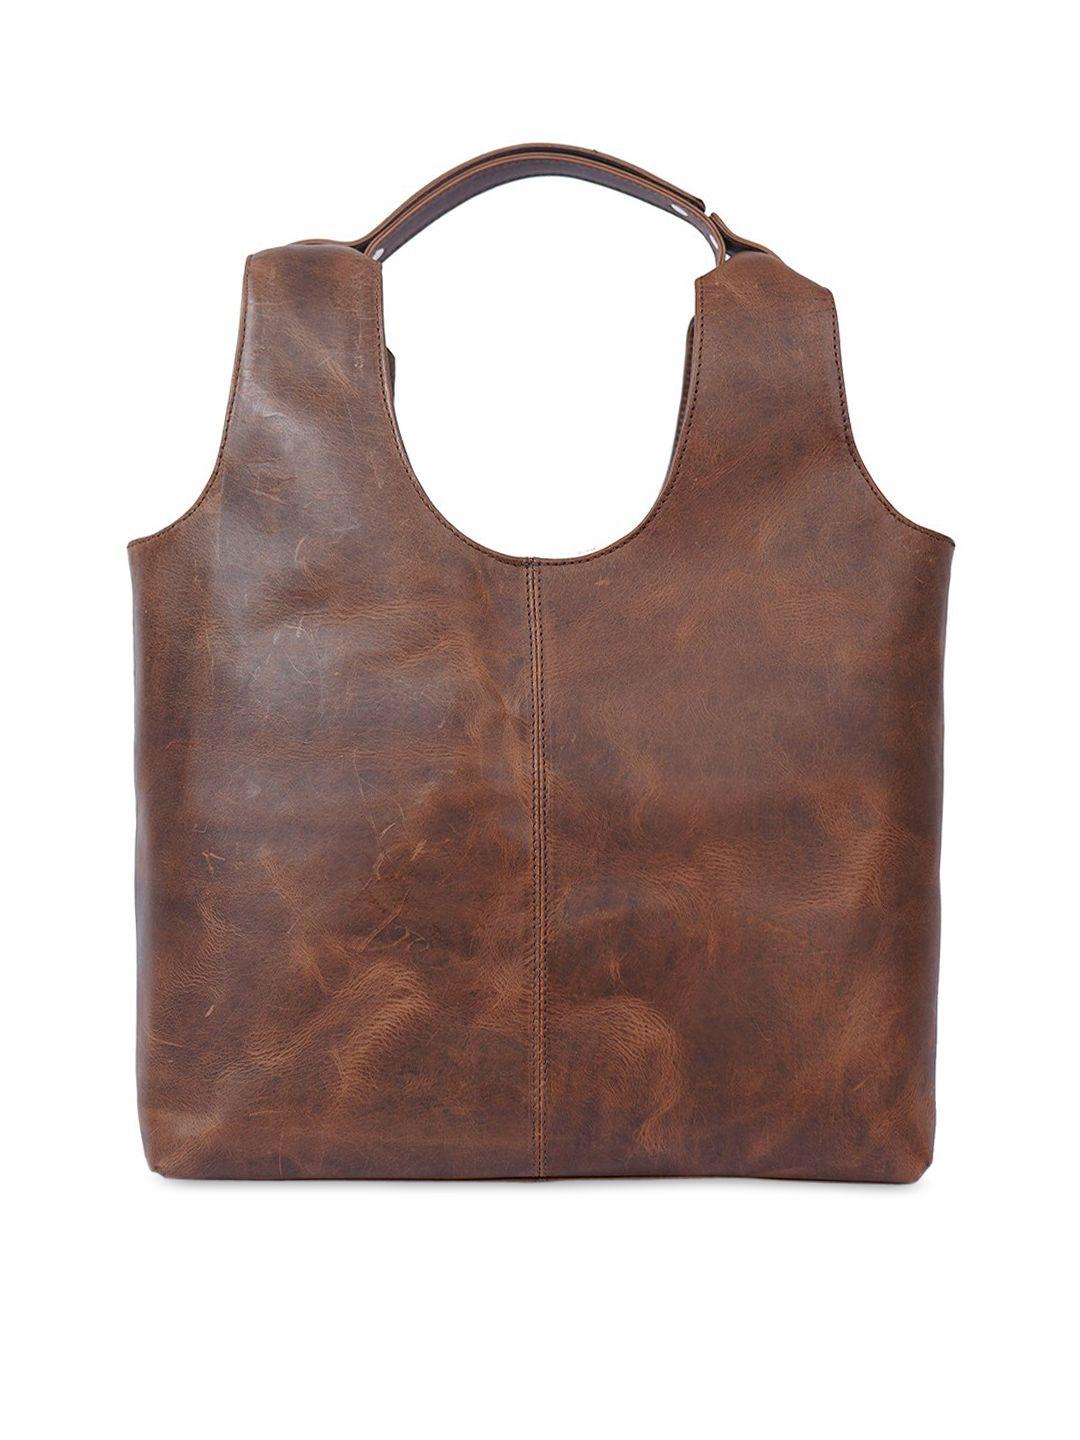 perked tan brown leather structured handheld bag